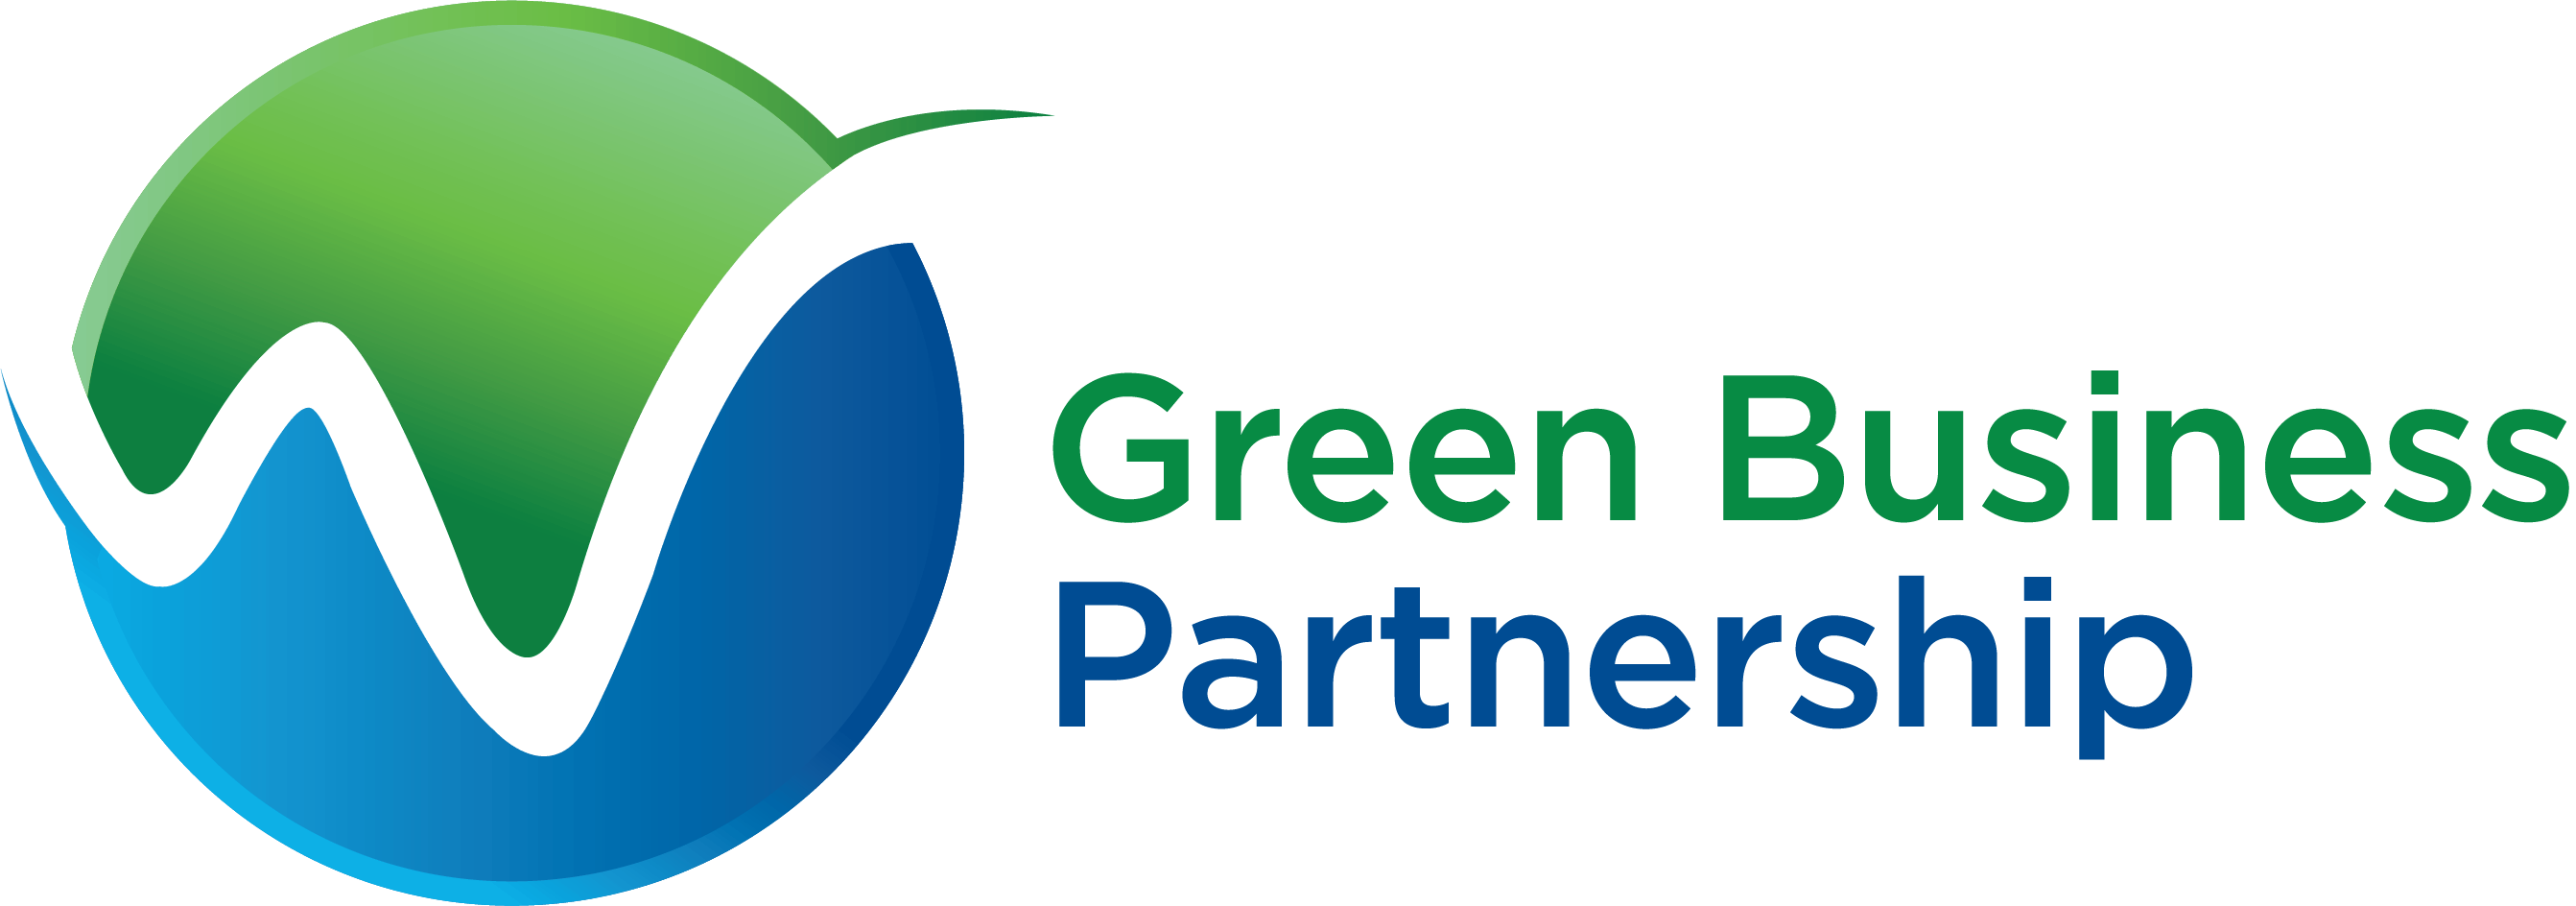 Partnership Logo - Green Business Partnership